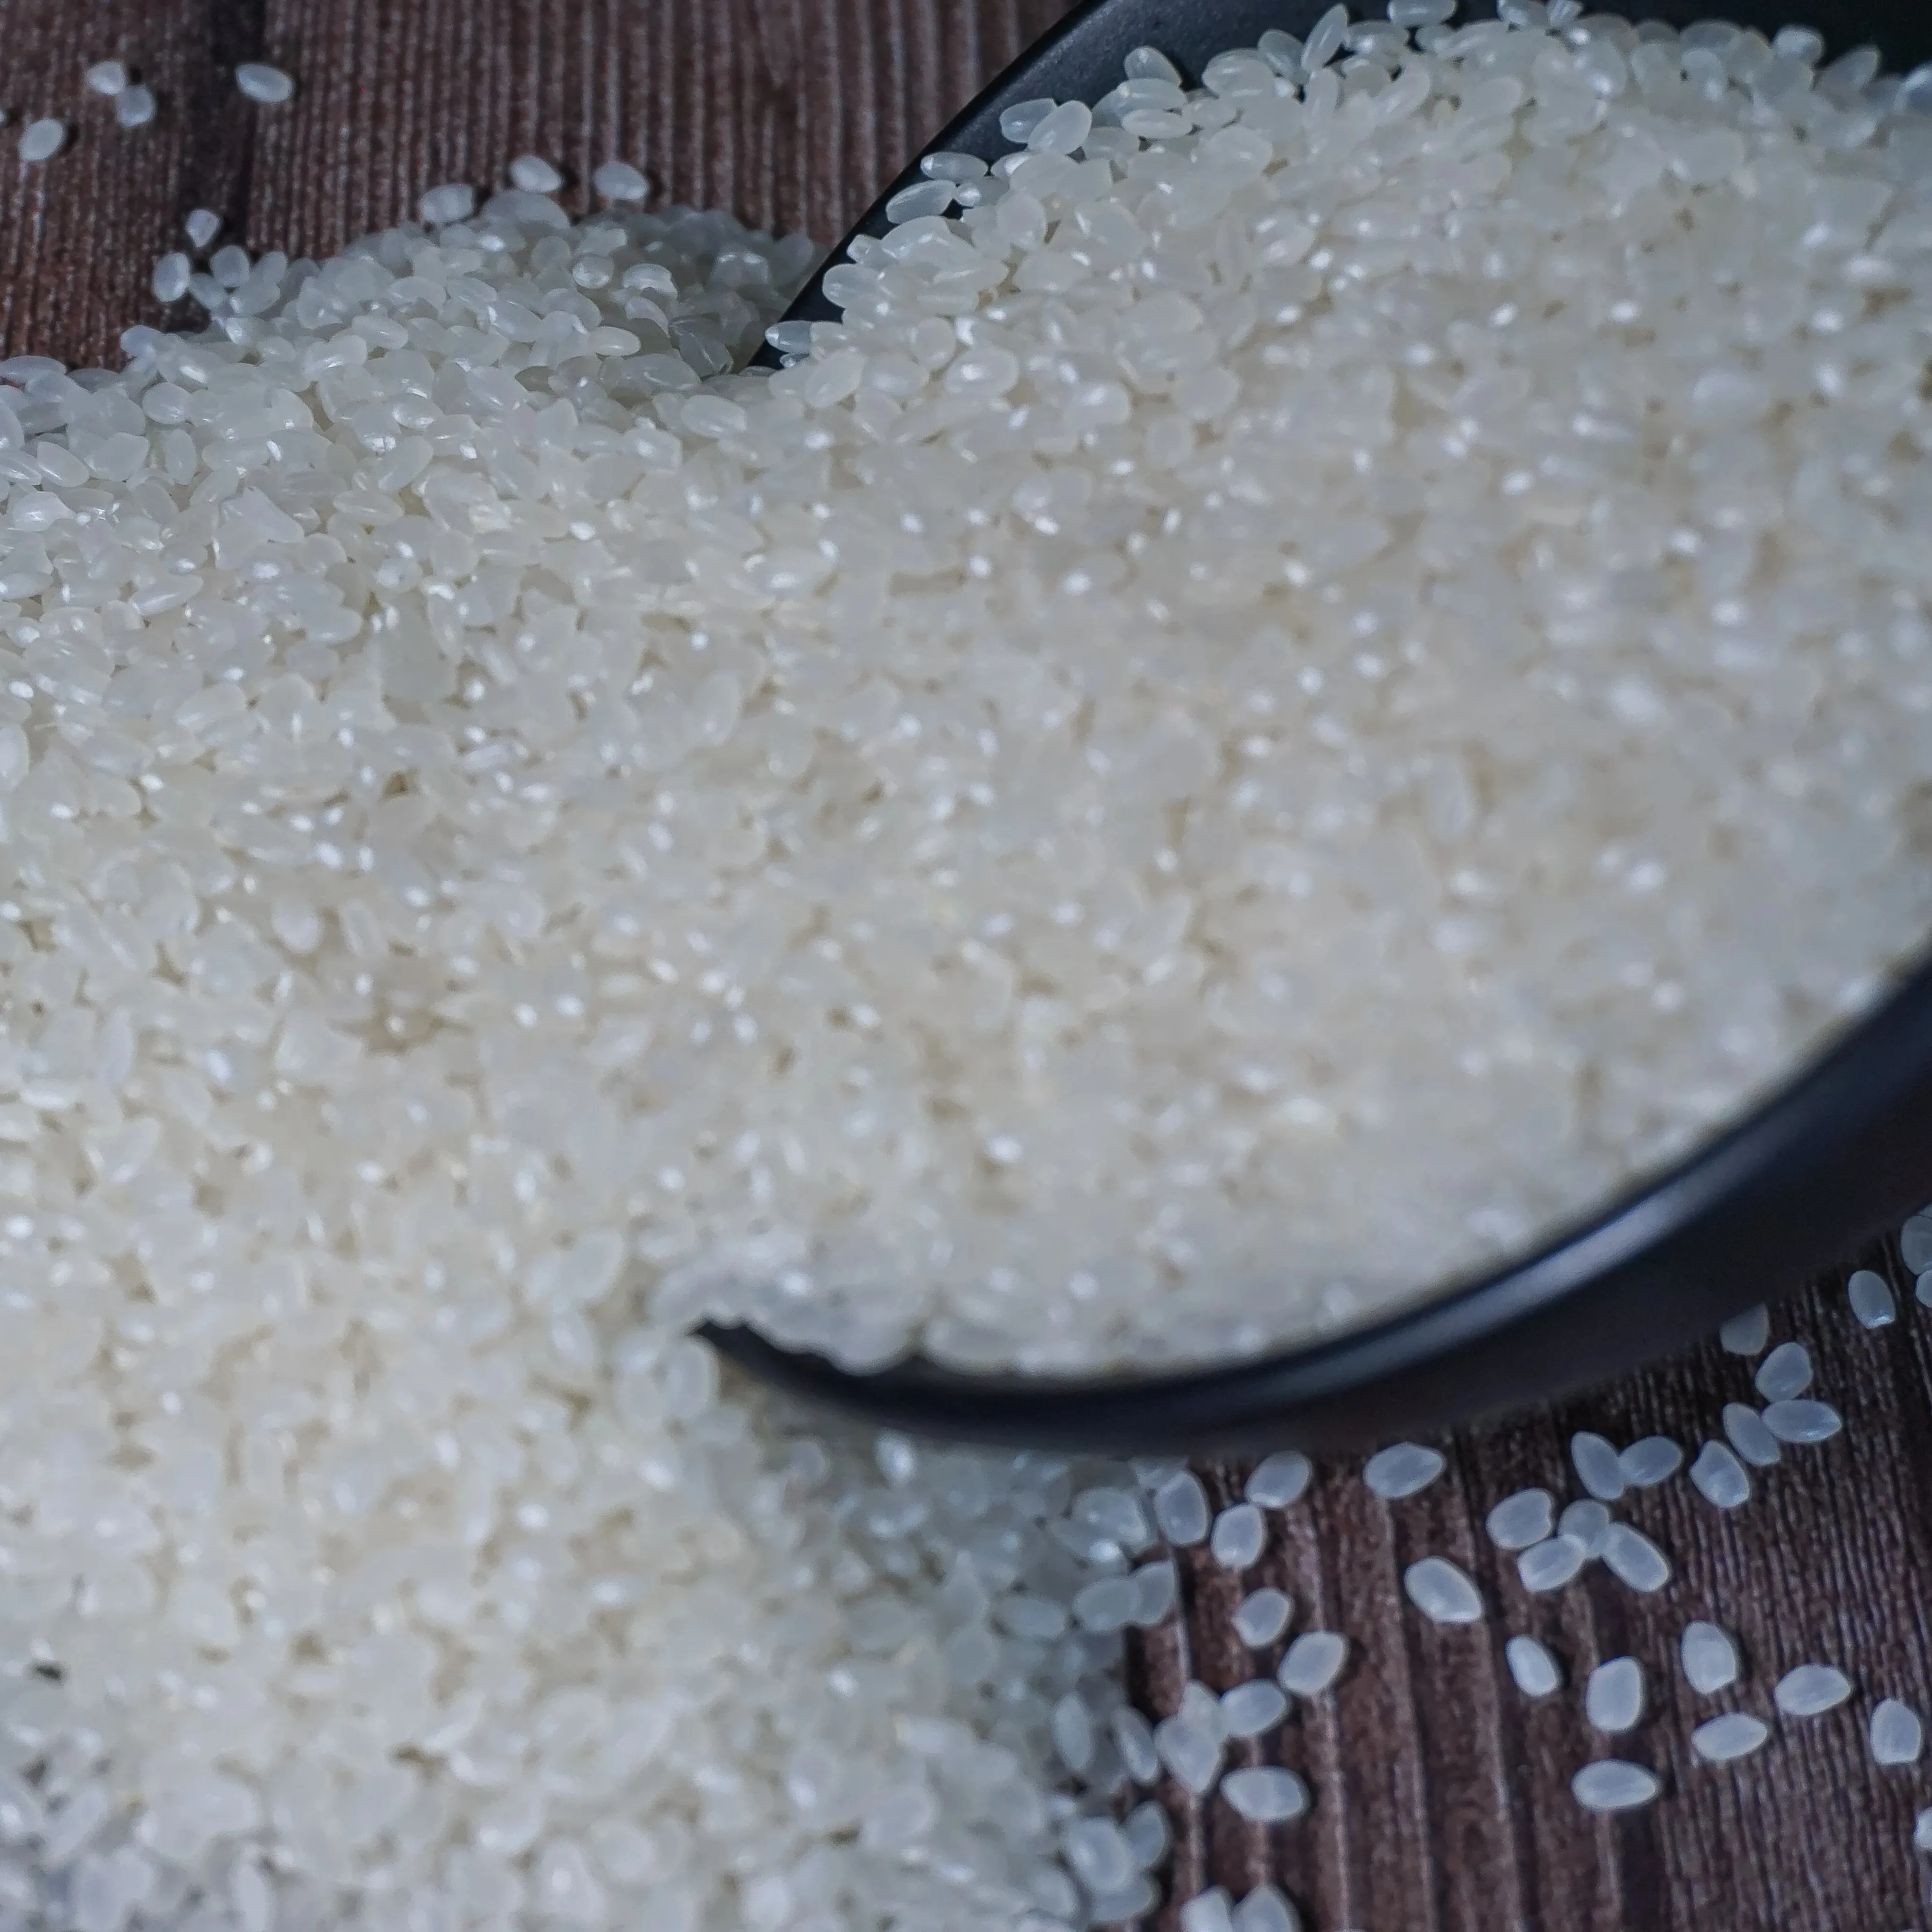 Top-Grade Japonica Rice from Vietnam - Premium Round Grain White Rice for Export at Unbeatable Prices, Vietnamese Rice